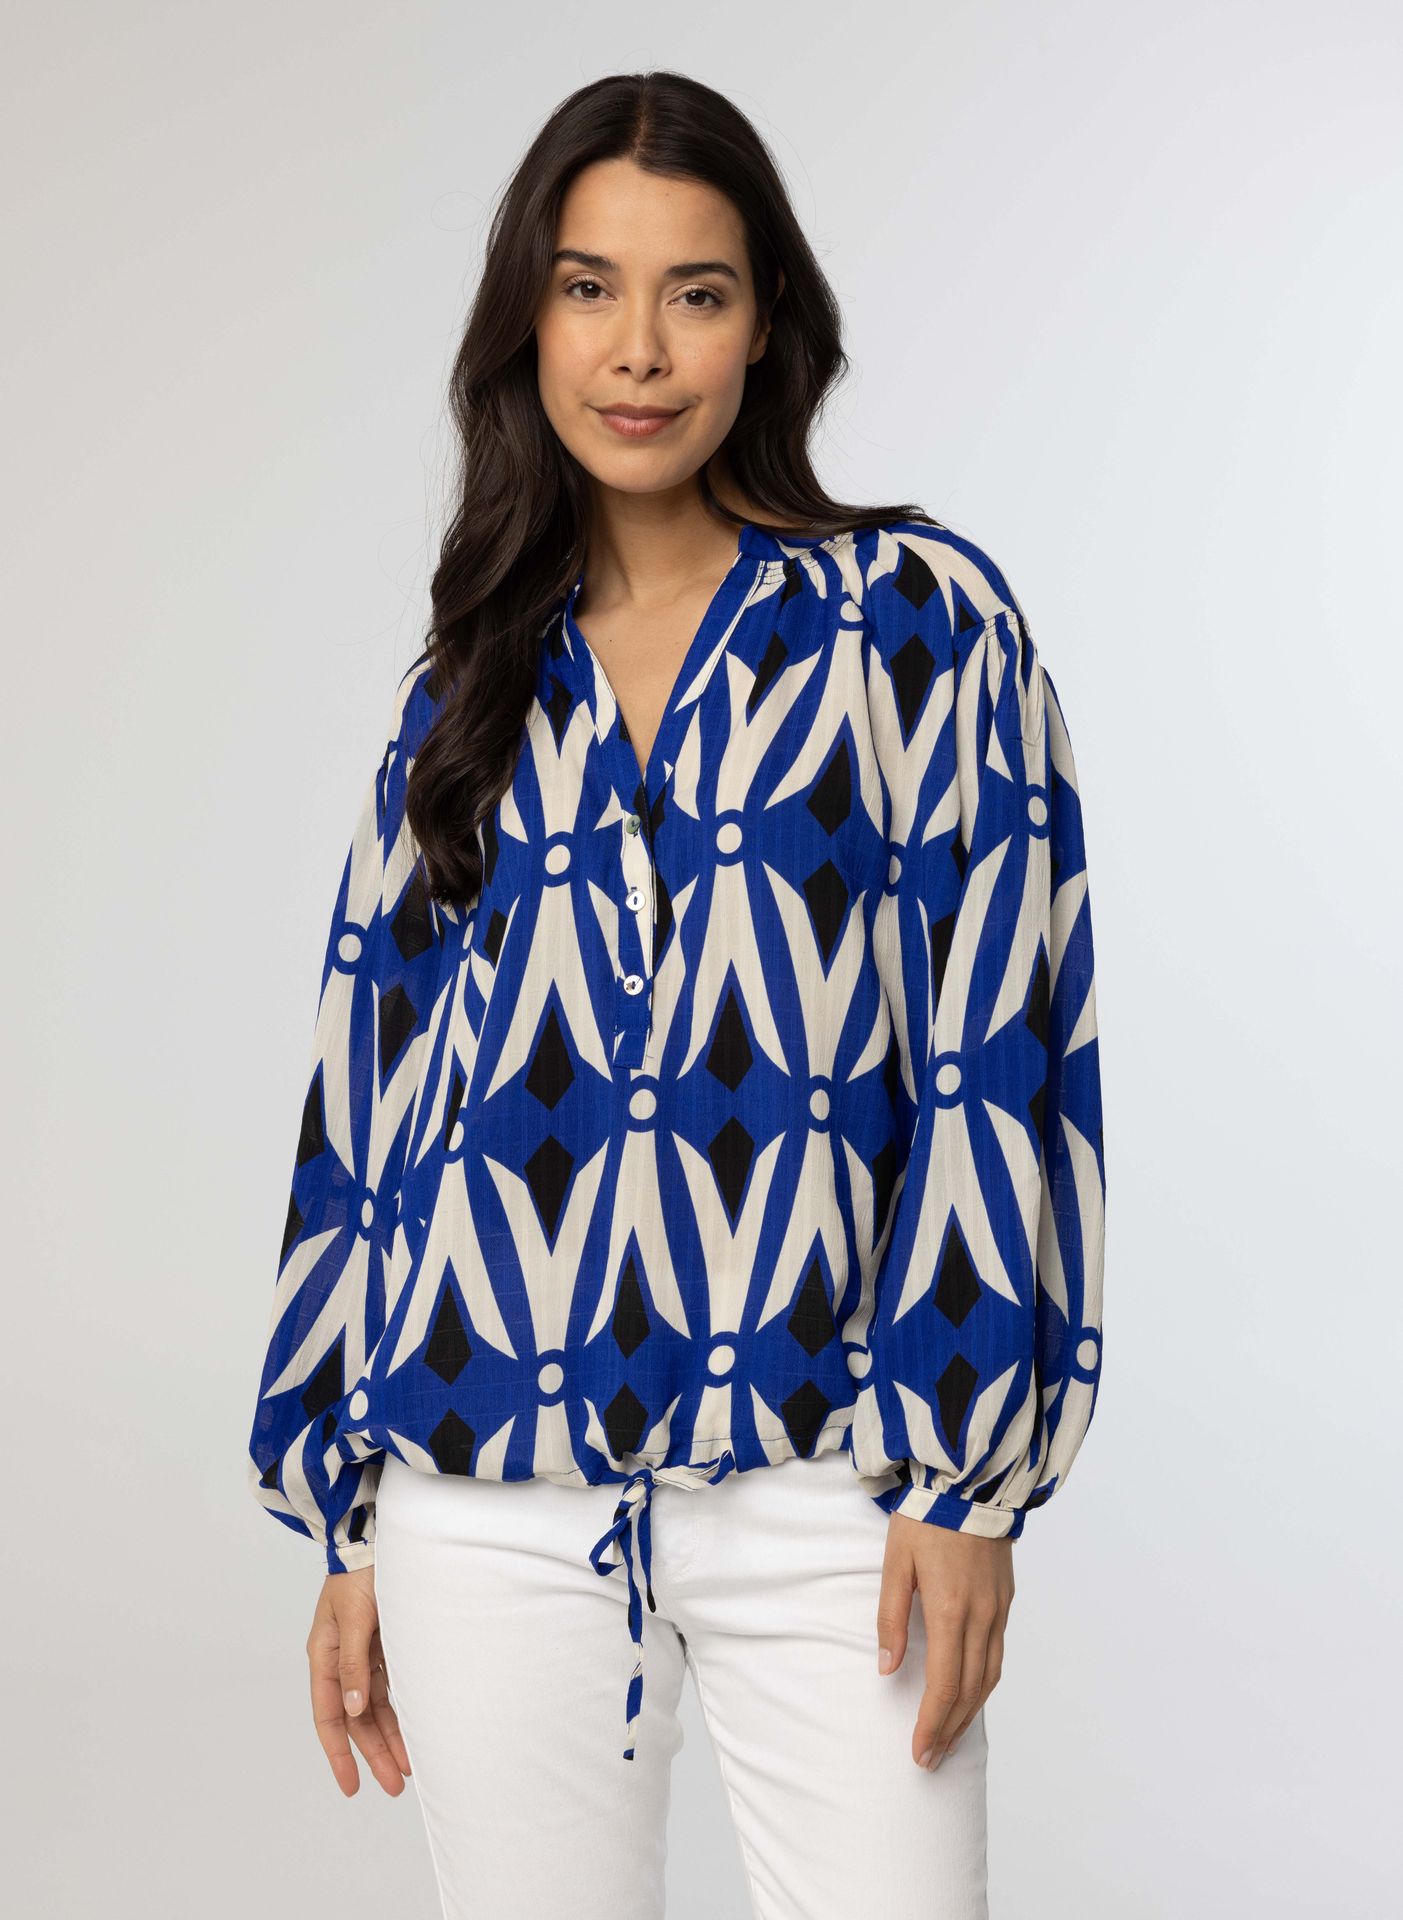  Kobaltblauwe blouse met pofmouwen blue multicolor 214180-420-40